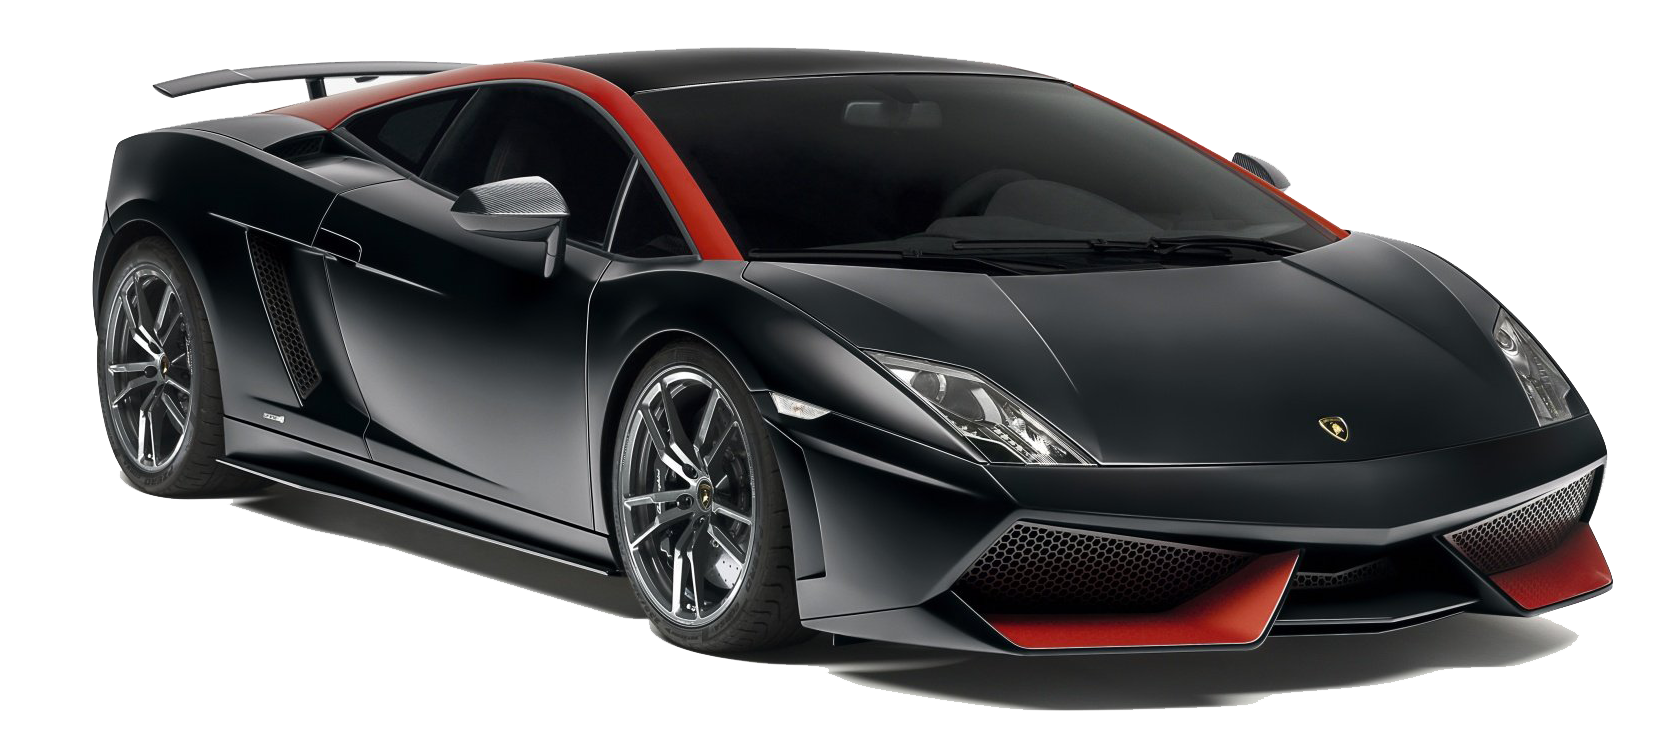 Aventador Lamborghini Sports Free Download Image PNG Image